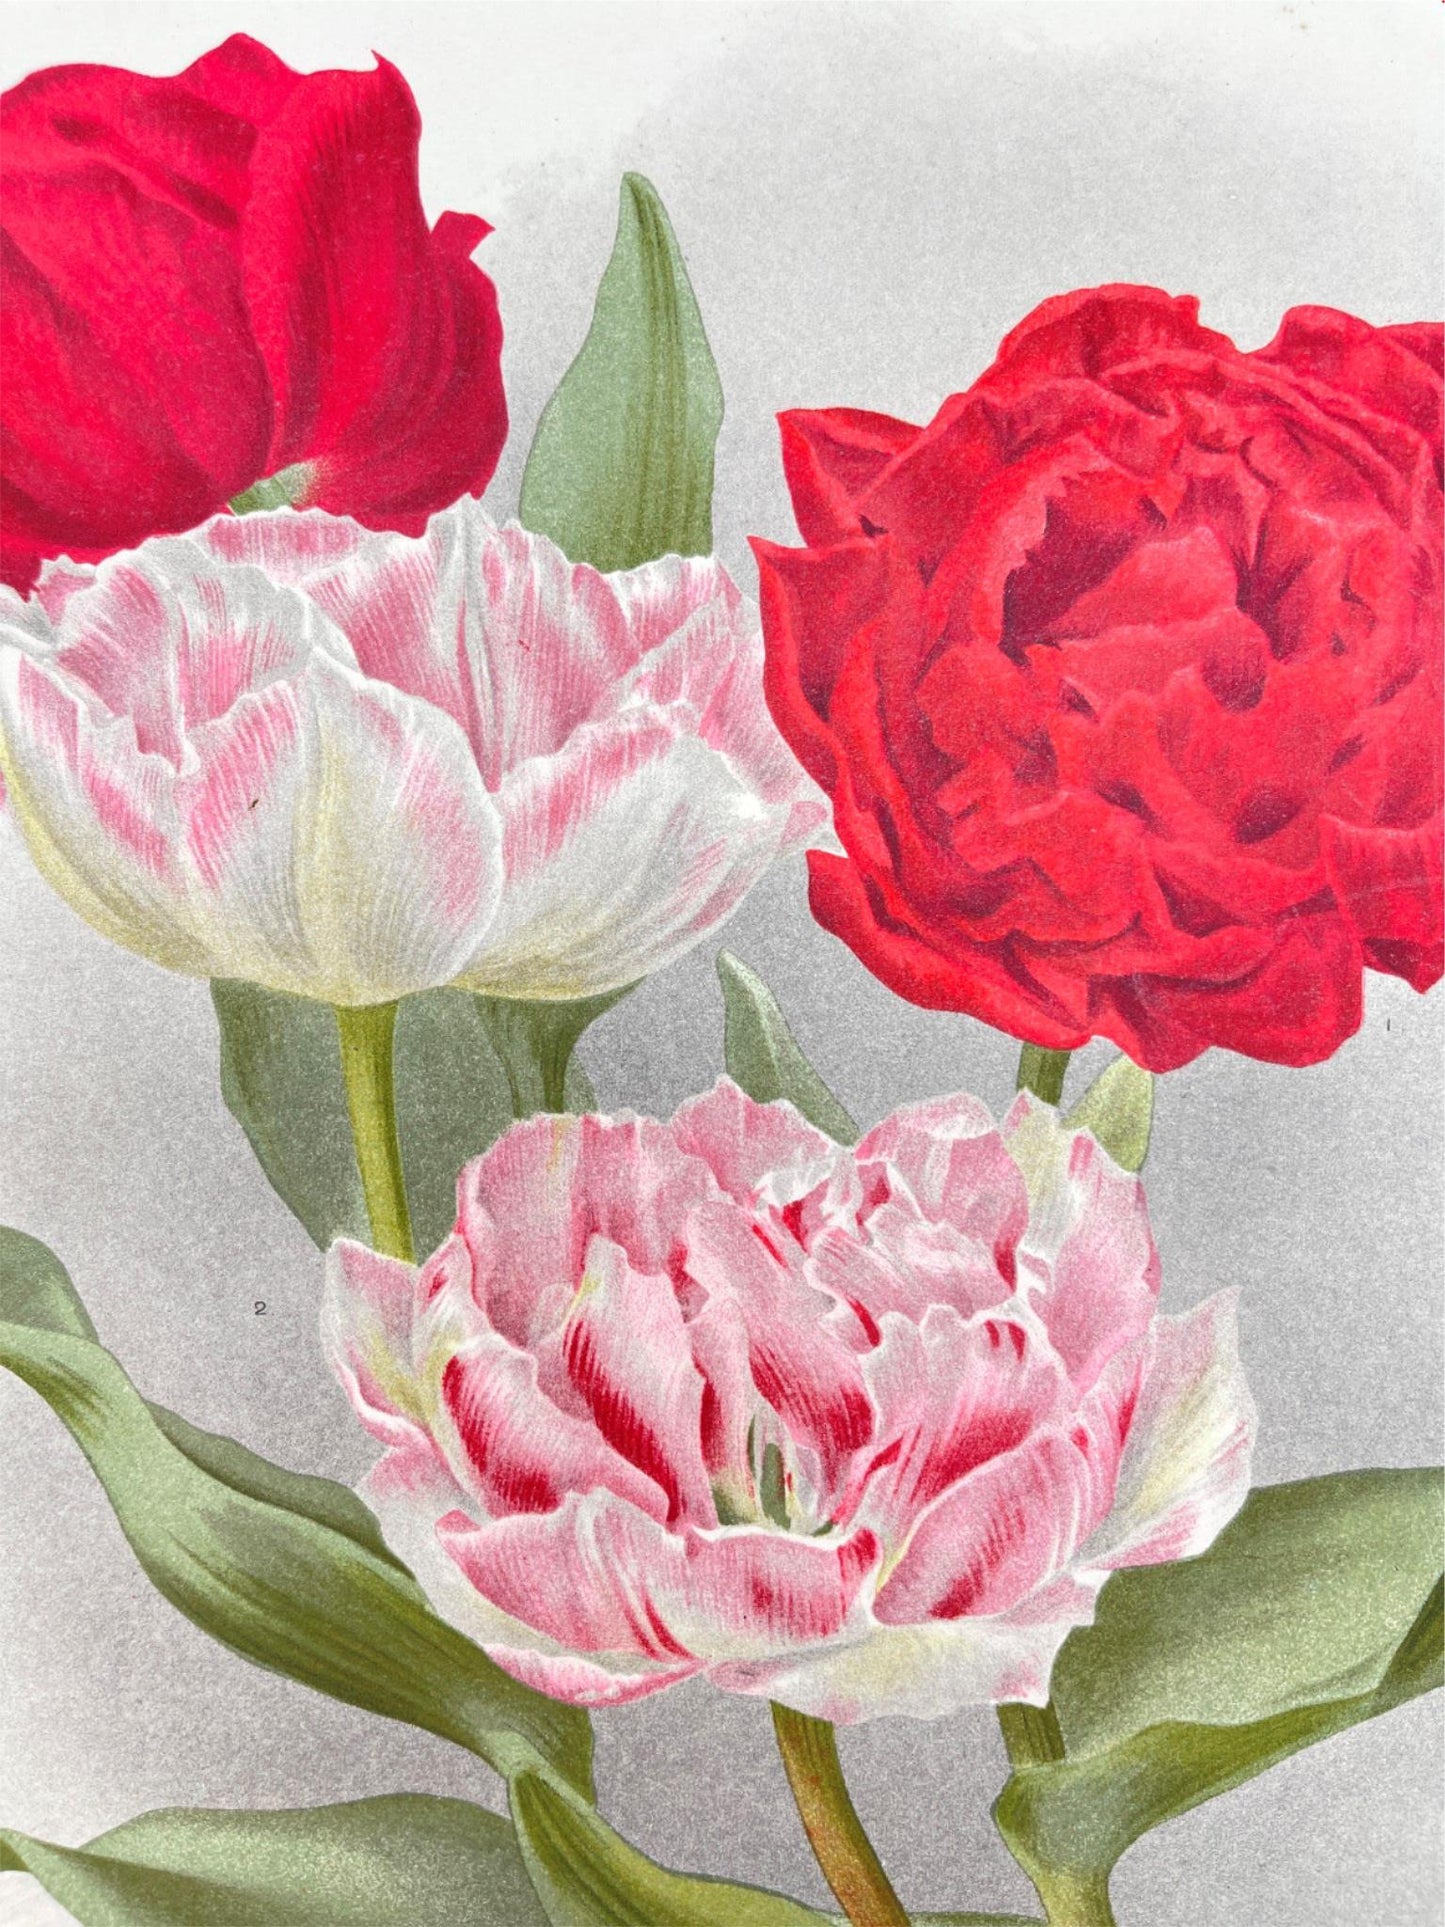 Antique Botanical Print - Flower Art - Imperator Rubrorum - Goffart & Severeijn - Dahlströms Fine Art